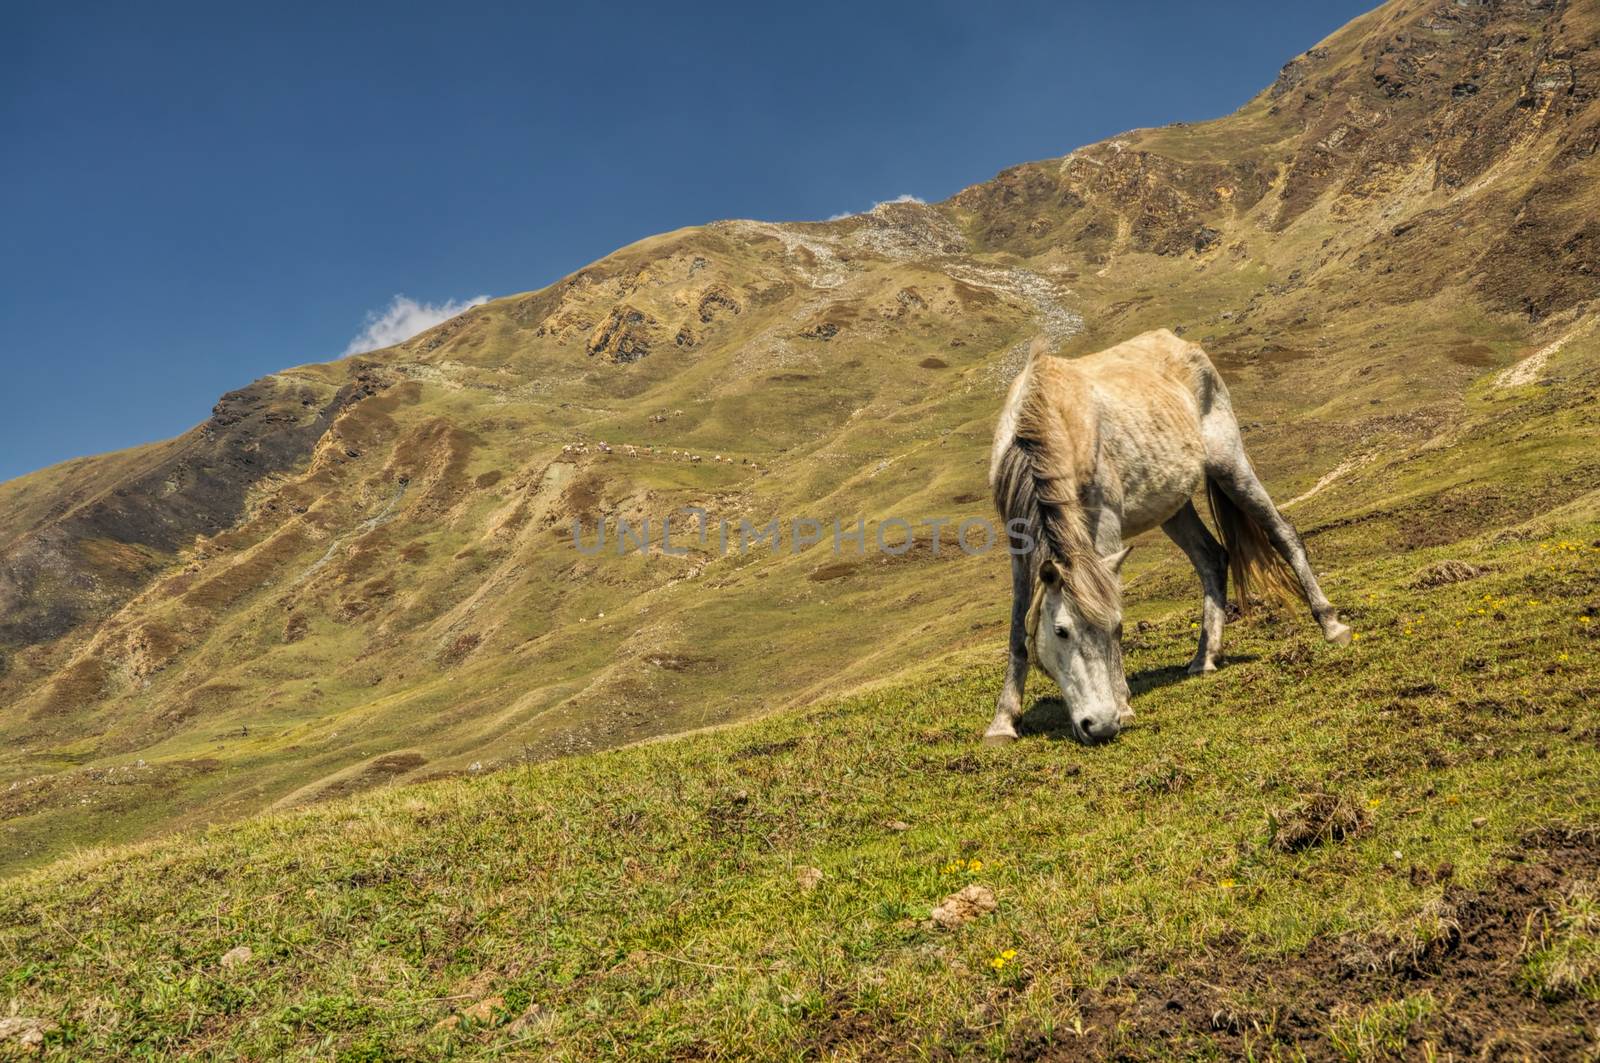 Horse in Himalayas by MichalKnitl